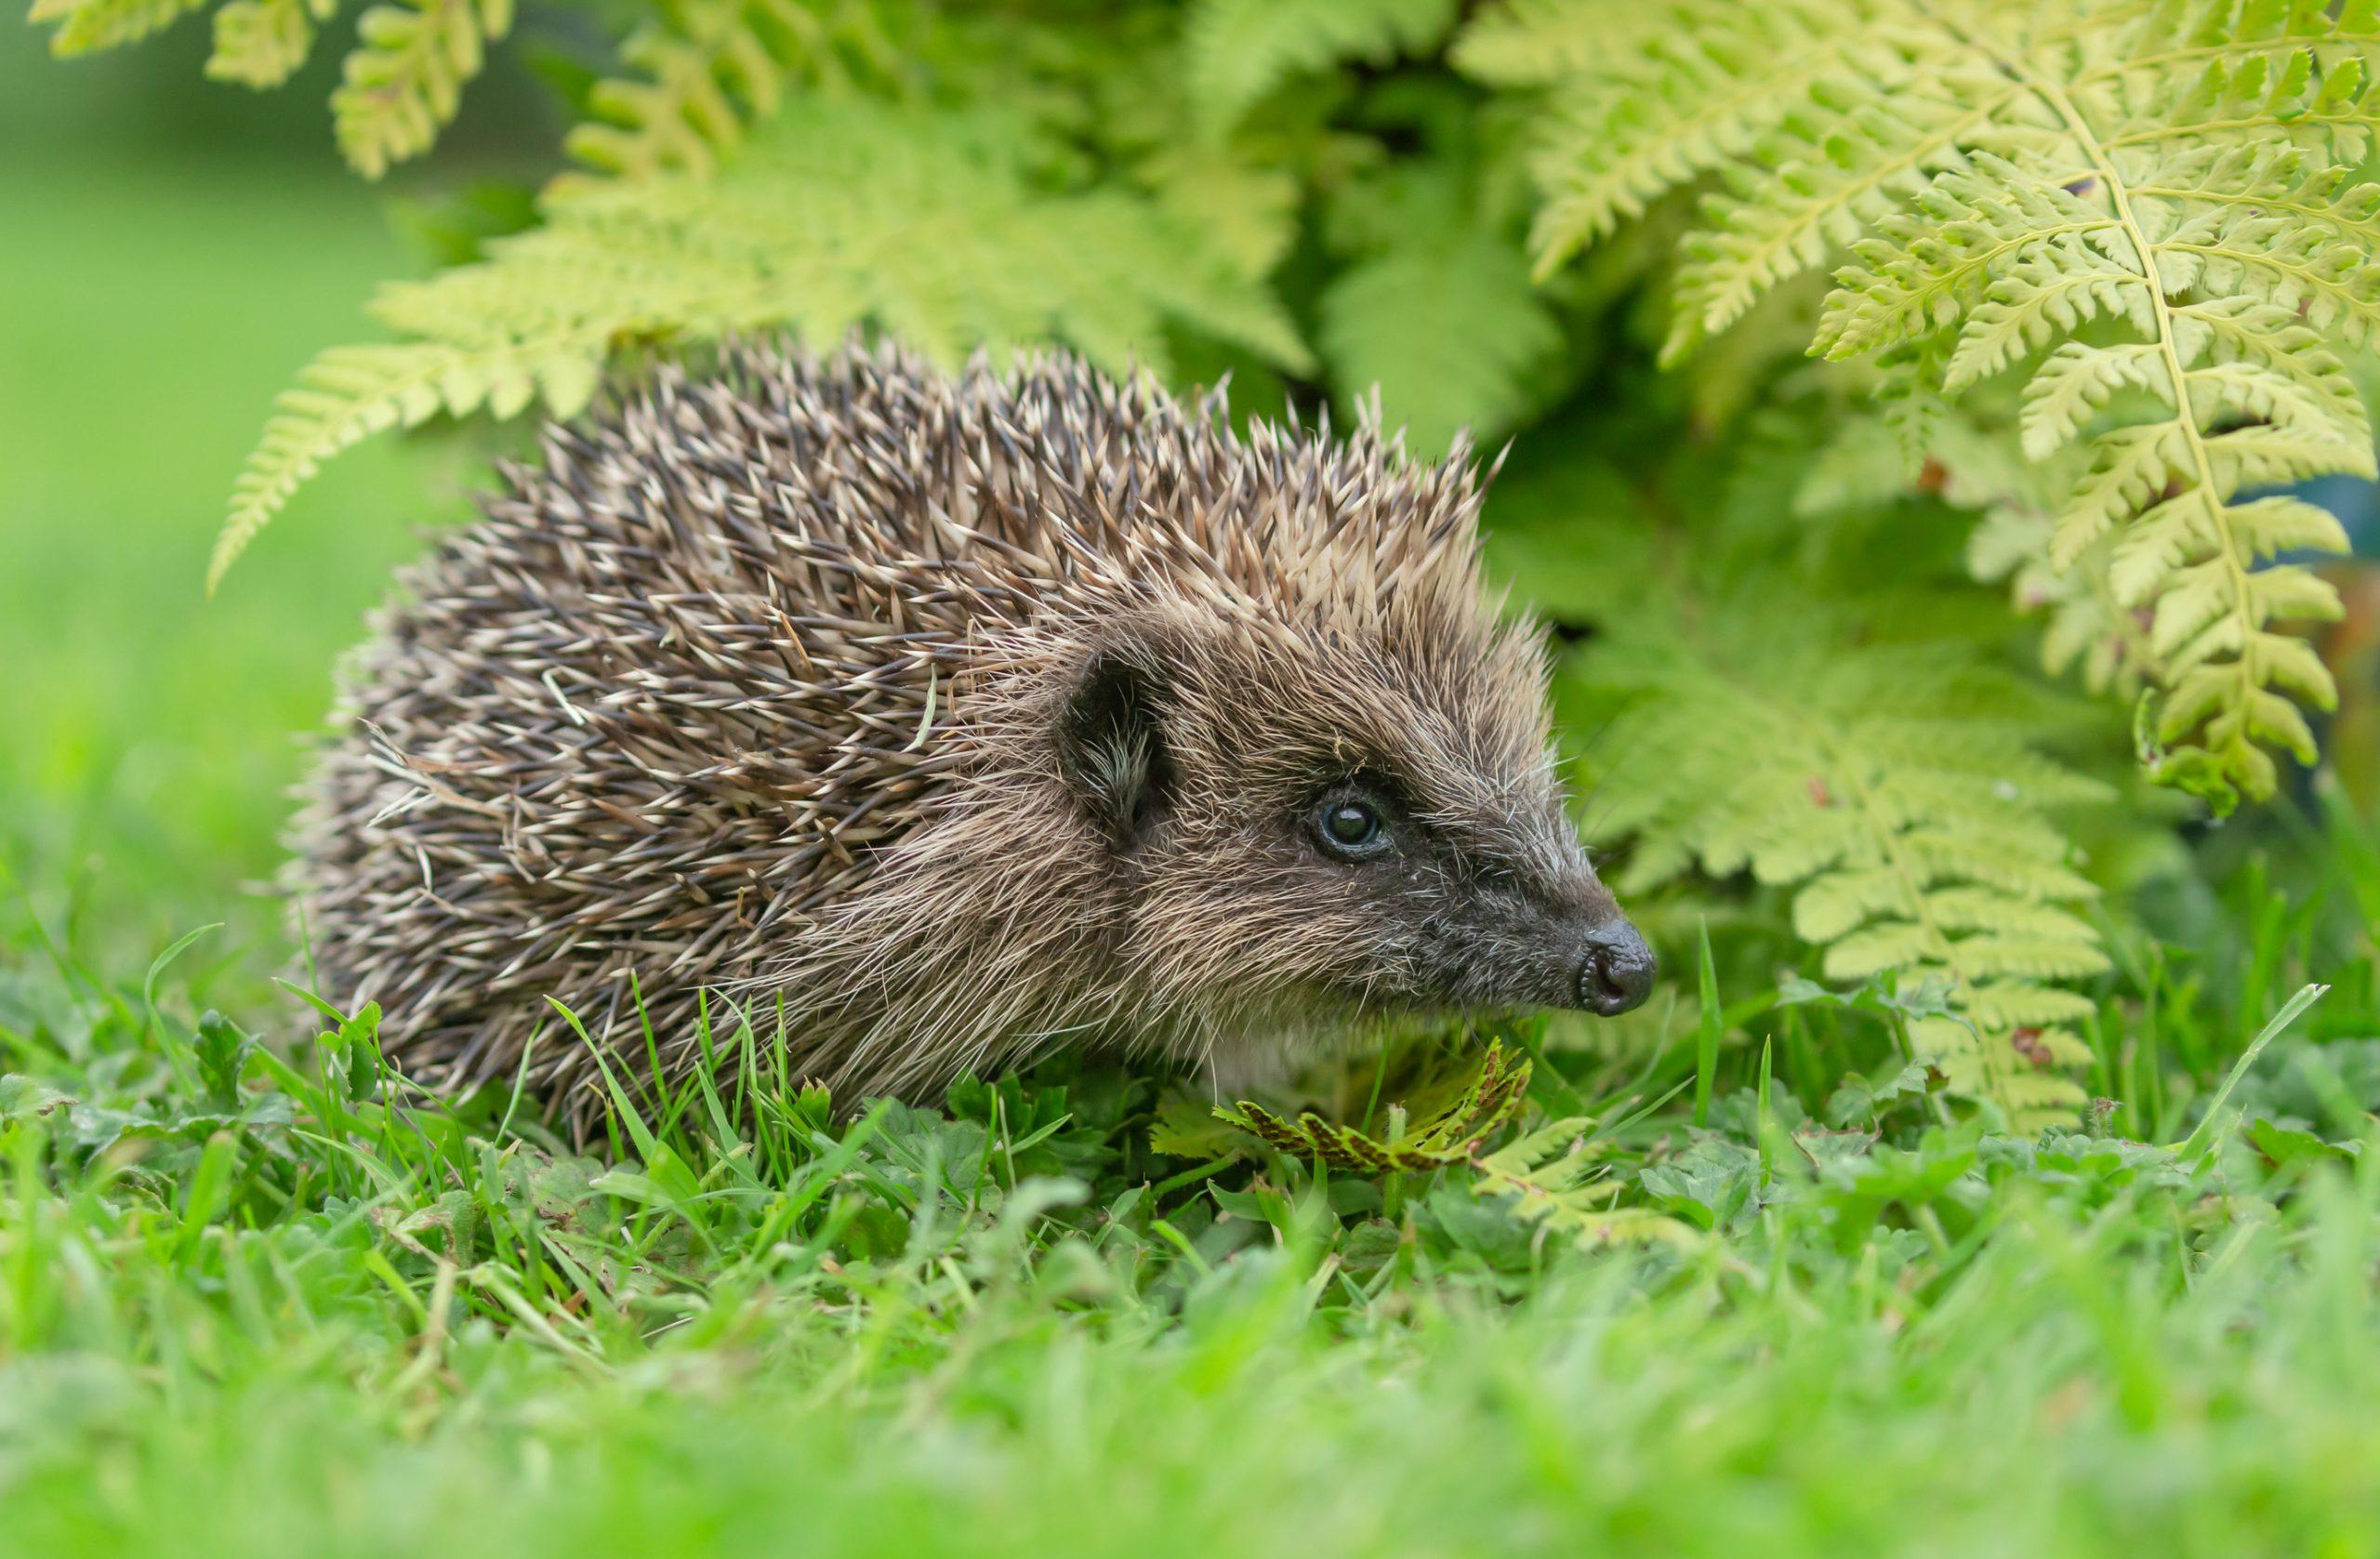 European hedgehog facing right in natural garden habitat with green ferns